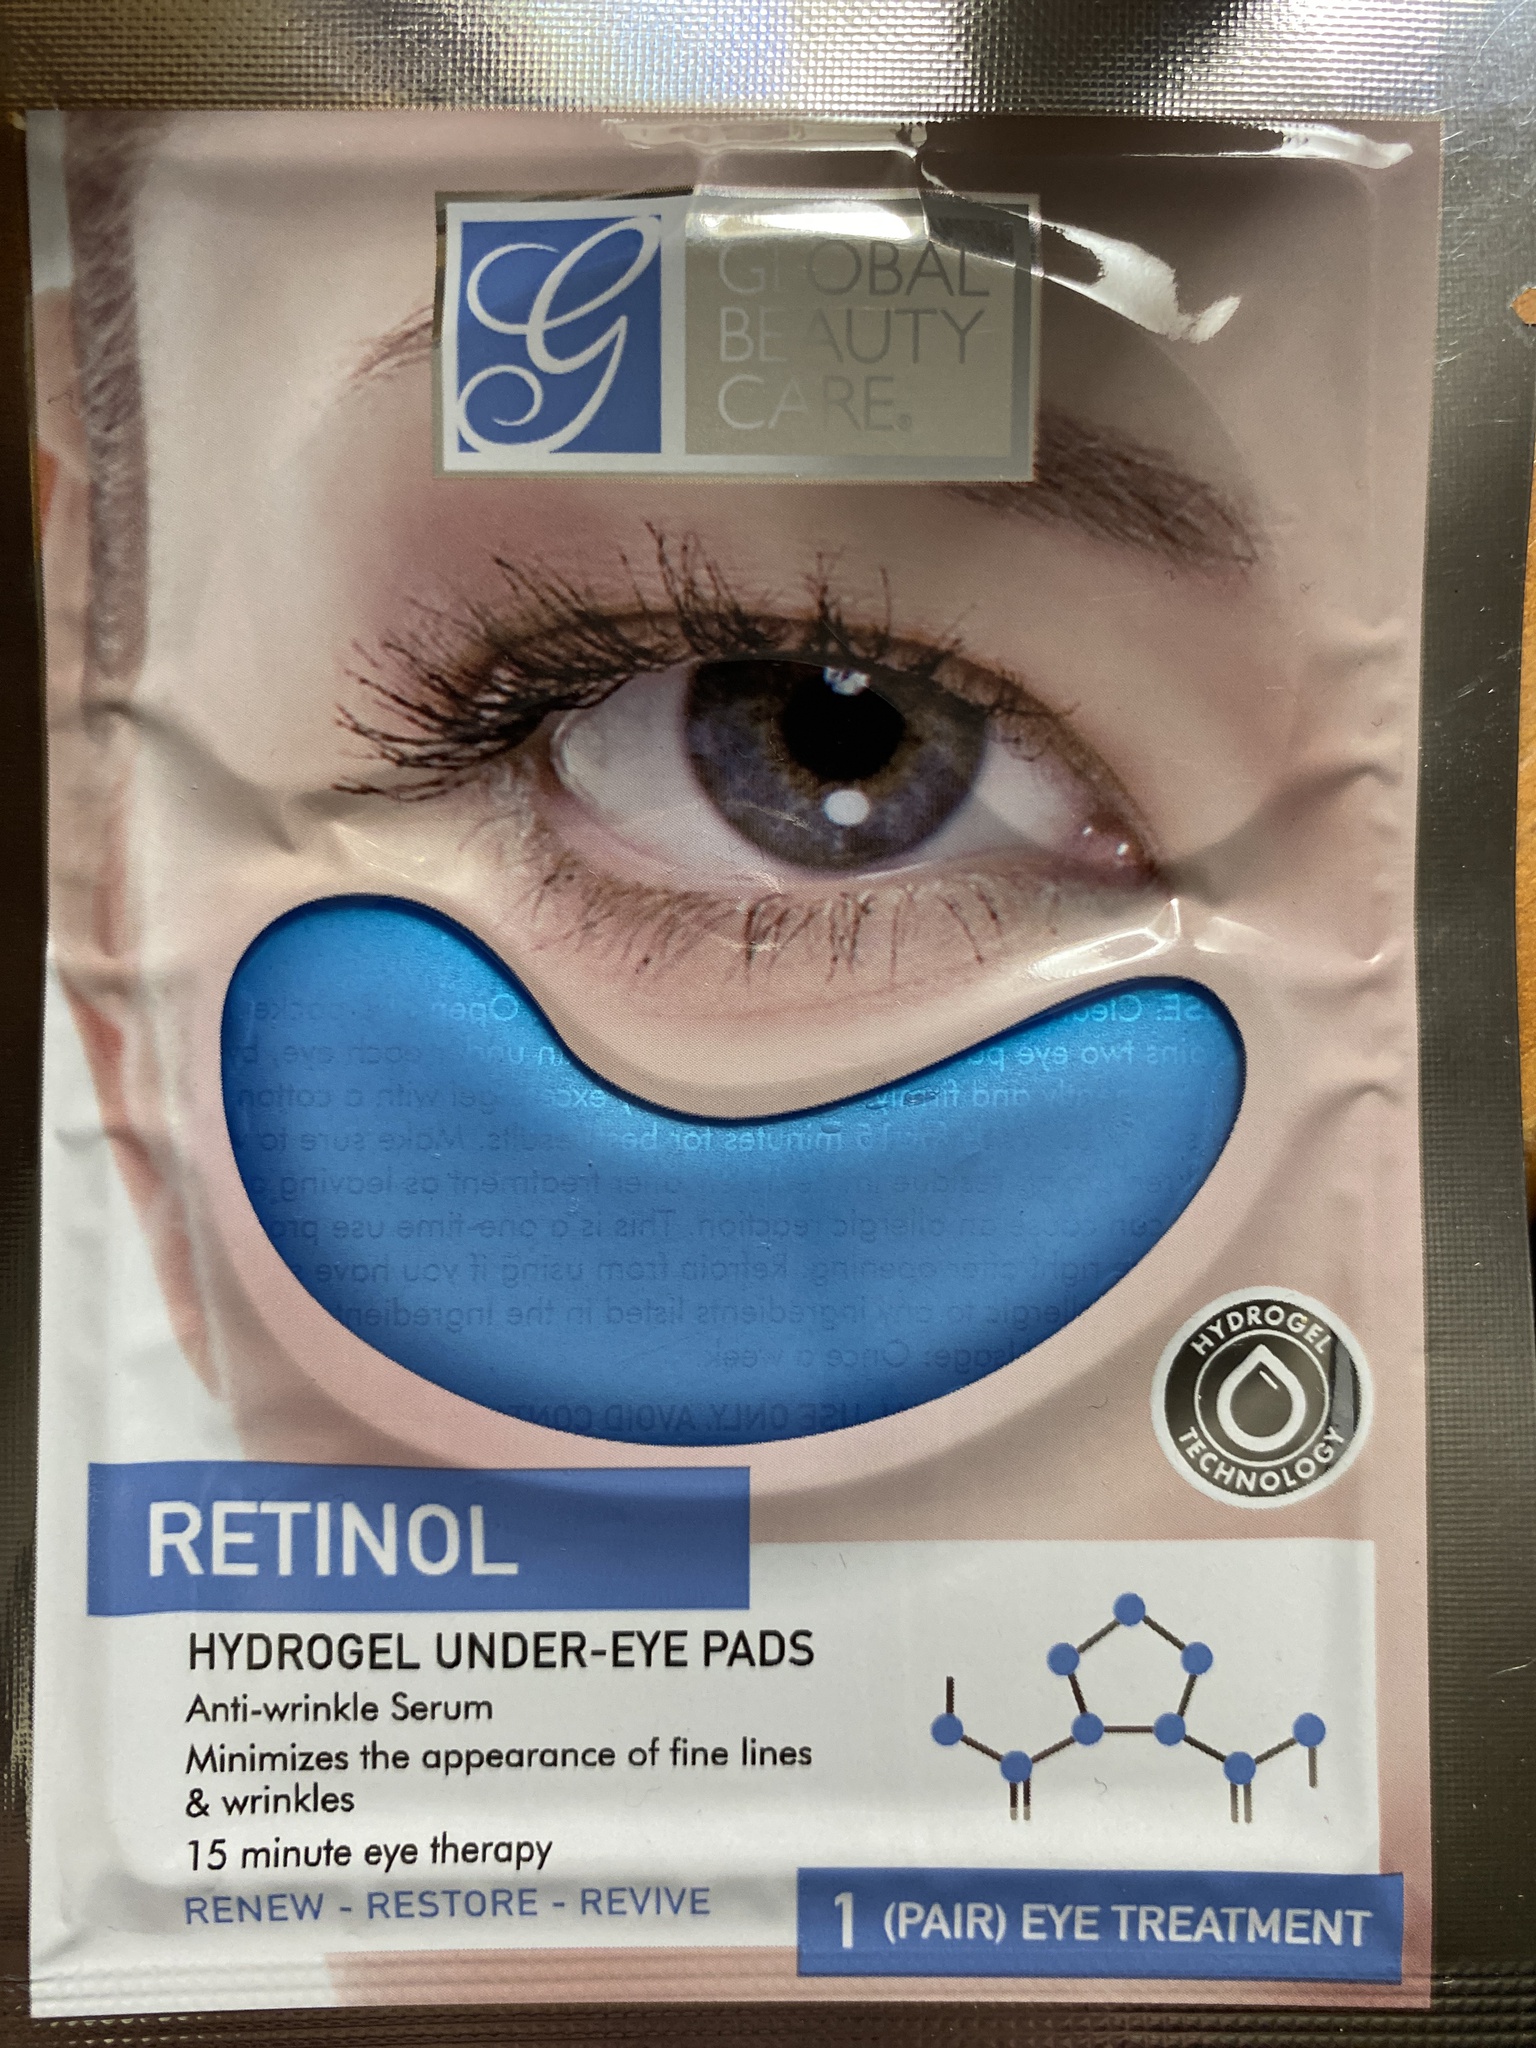 Global Beauty Care Retinol Hydrogel Under Eye Pads